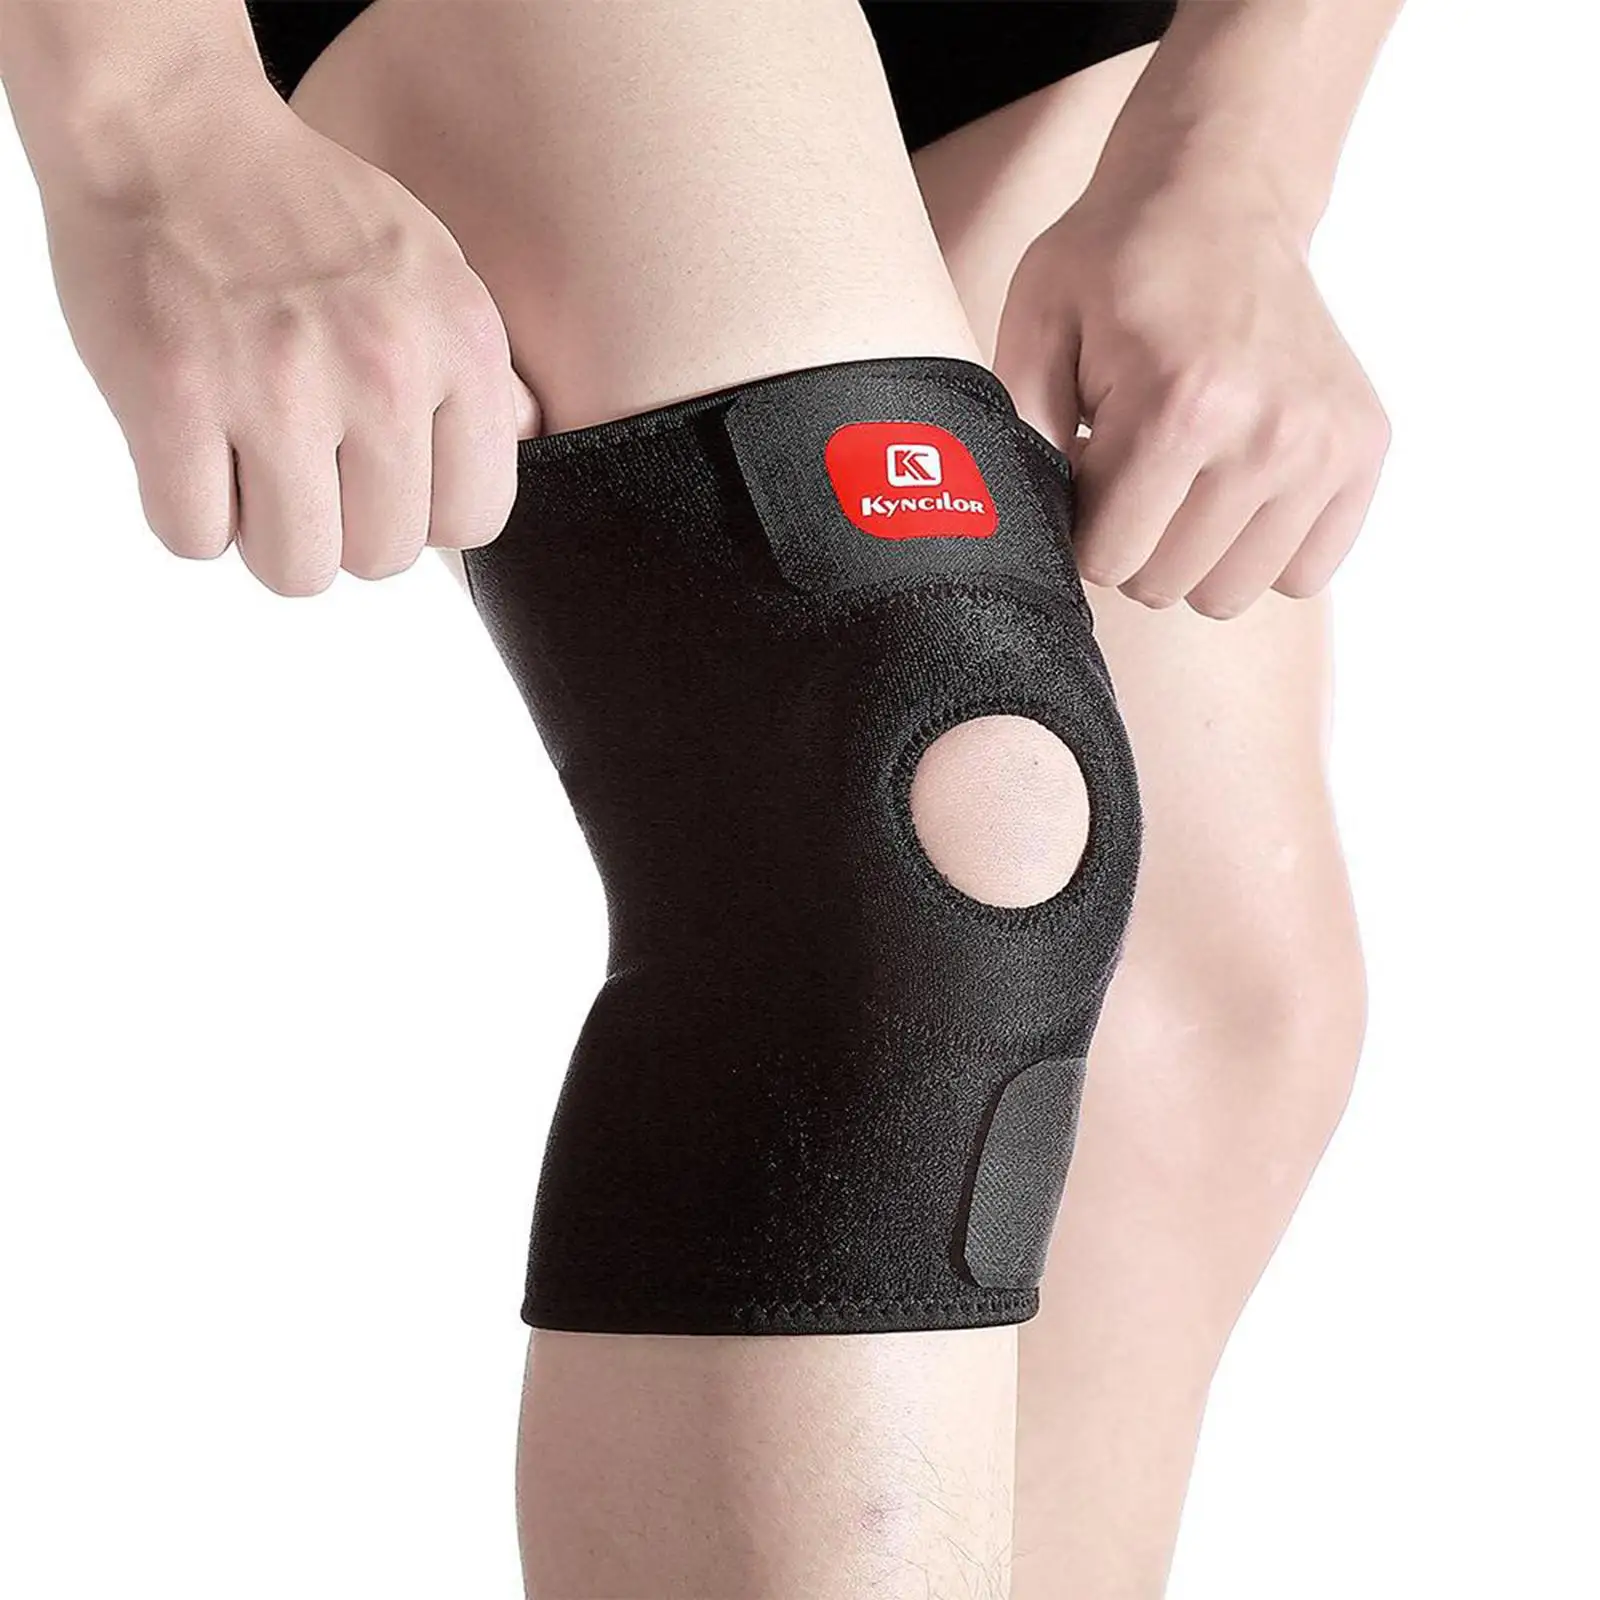 Adjustable Knee Brace Protector Compression Sleeve Arthritis Pain Relief